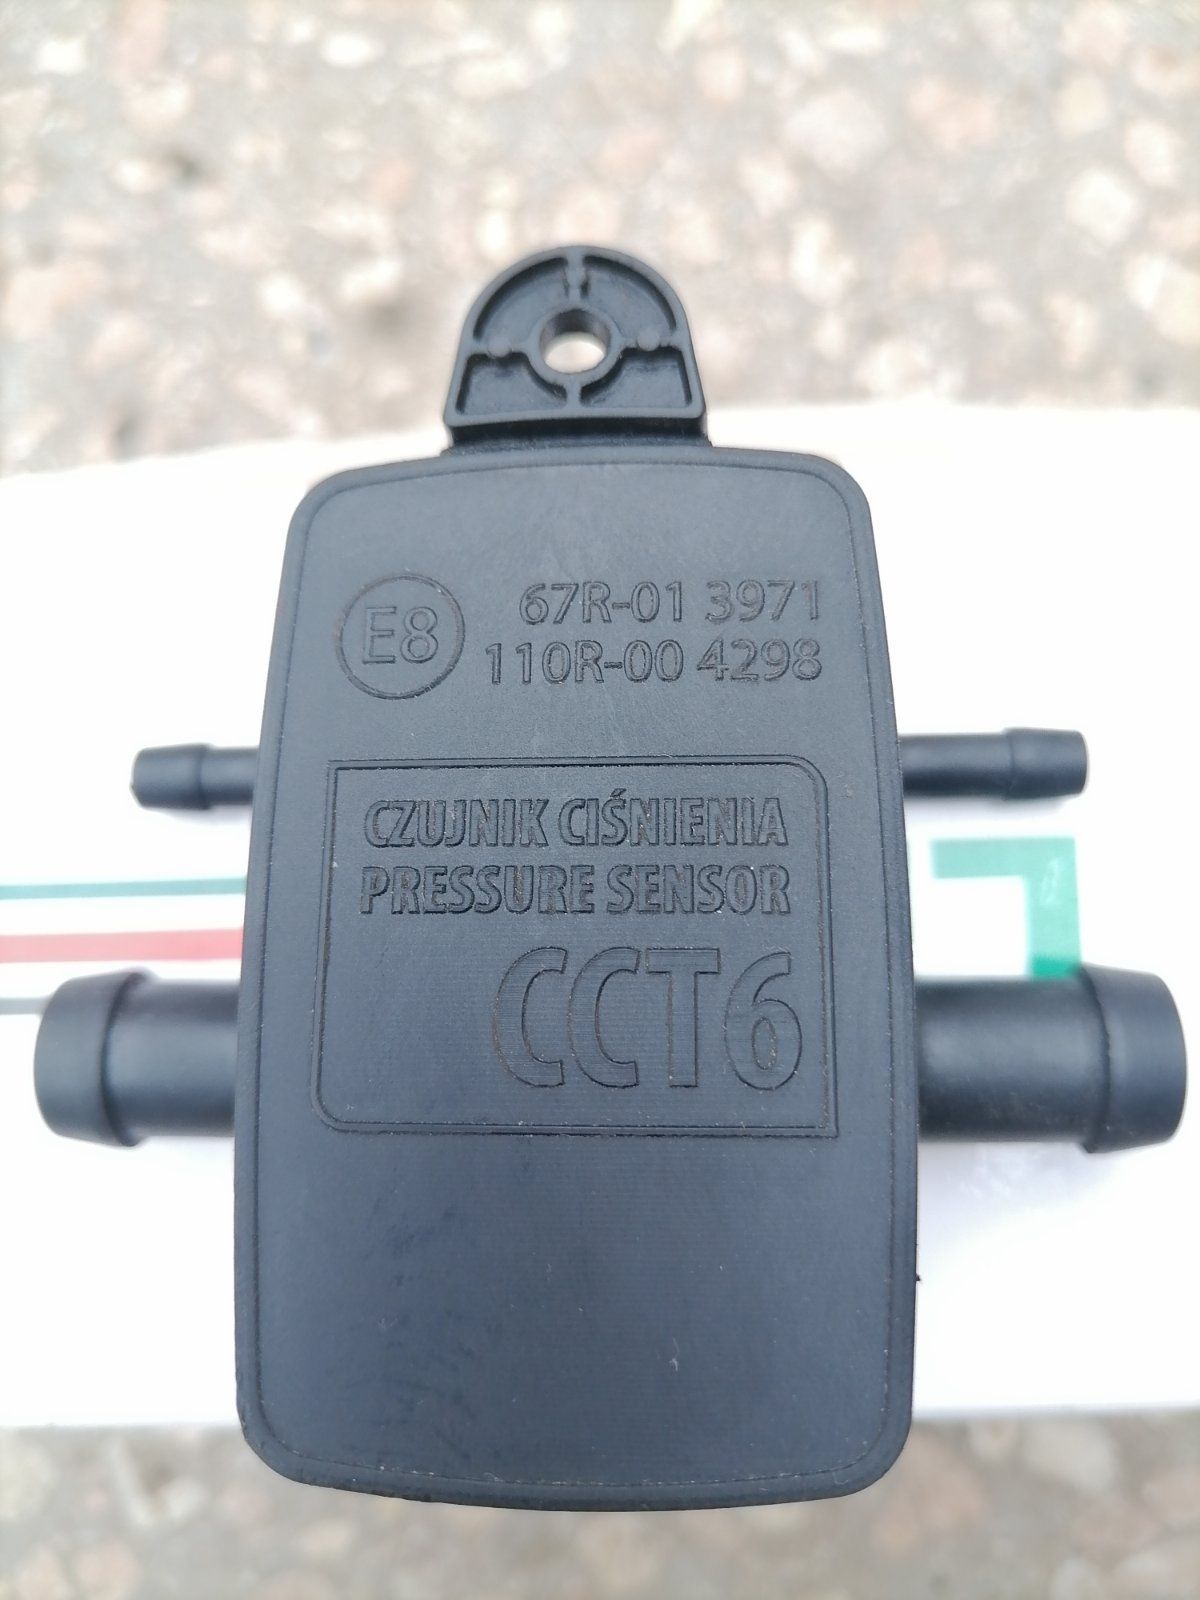 МАР Сенсор КМЕ CCT-6D  Nevo Датчик давления вакуума